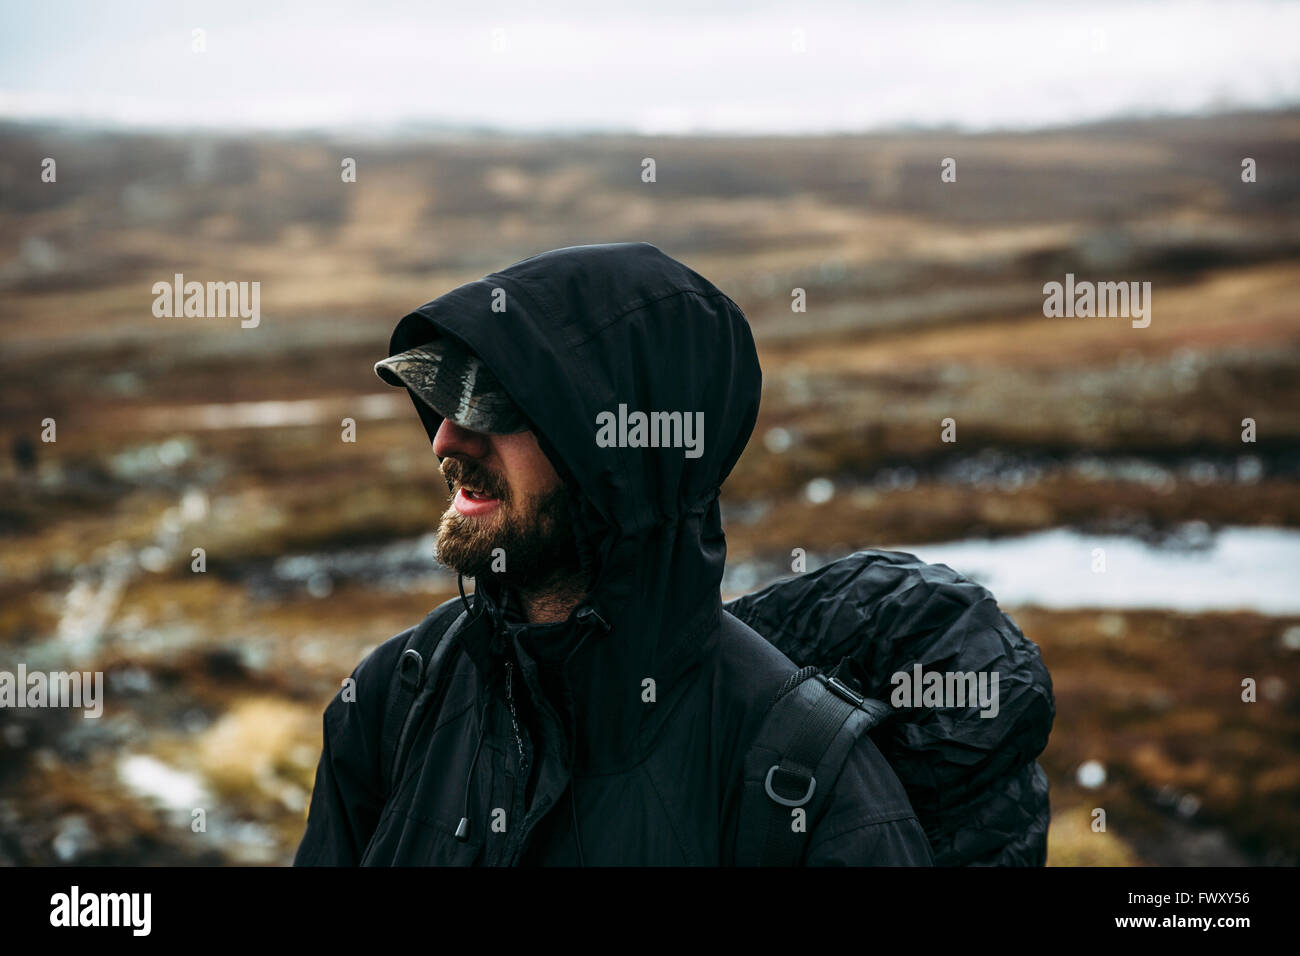 Sweden, Sylama, Jamtland, Portrait of backpacker in hooded jacket Stock Photo